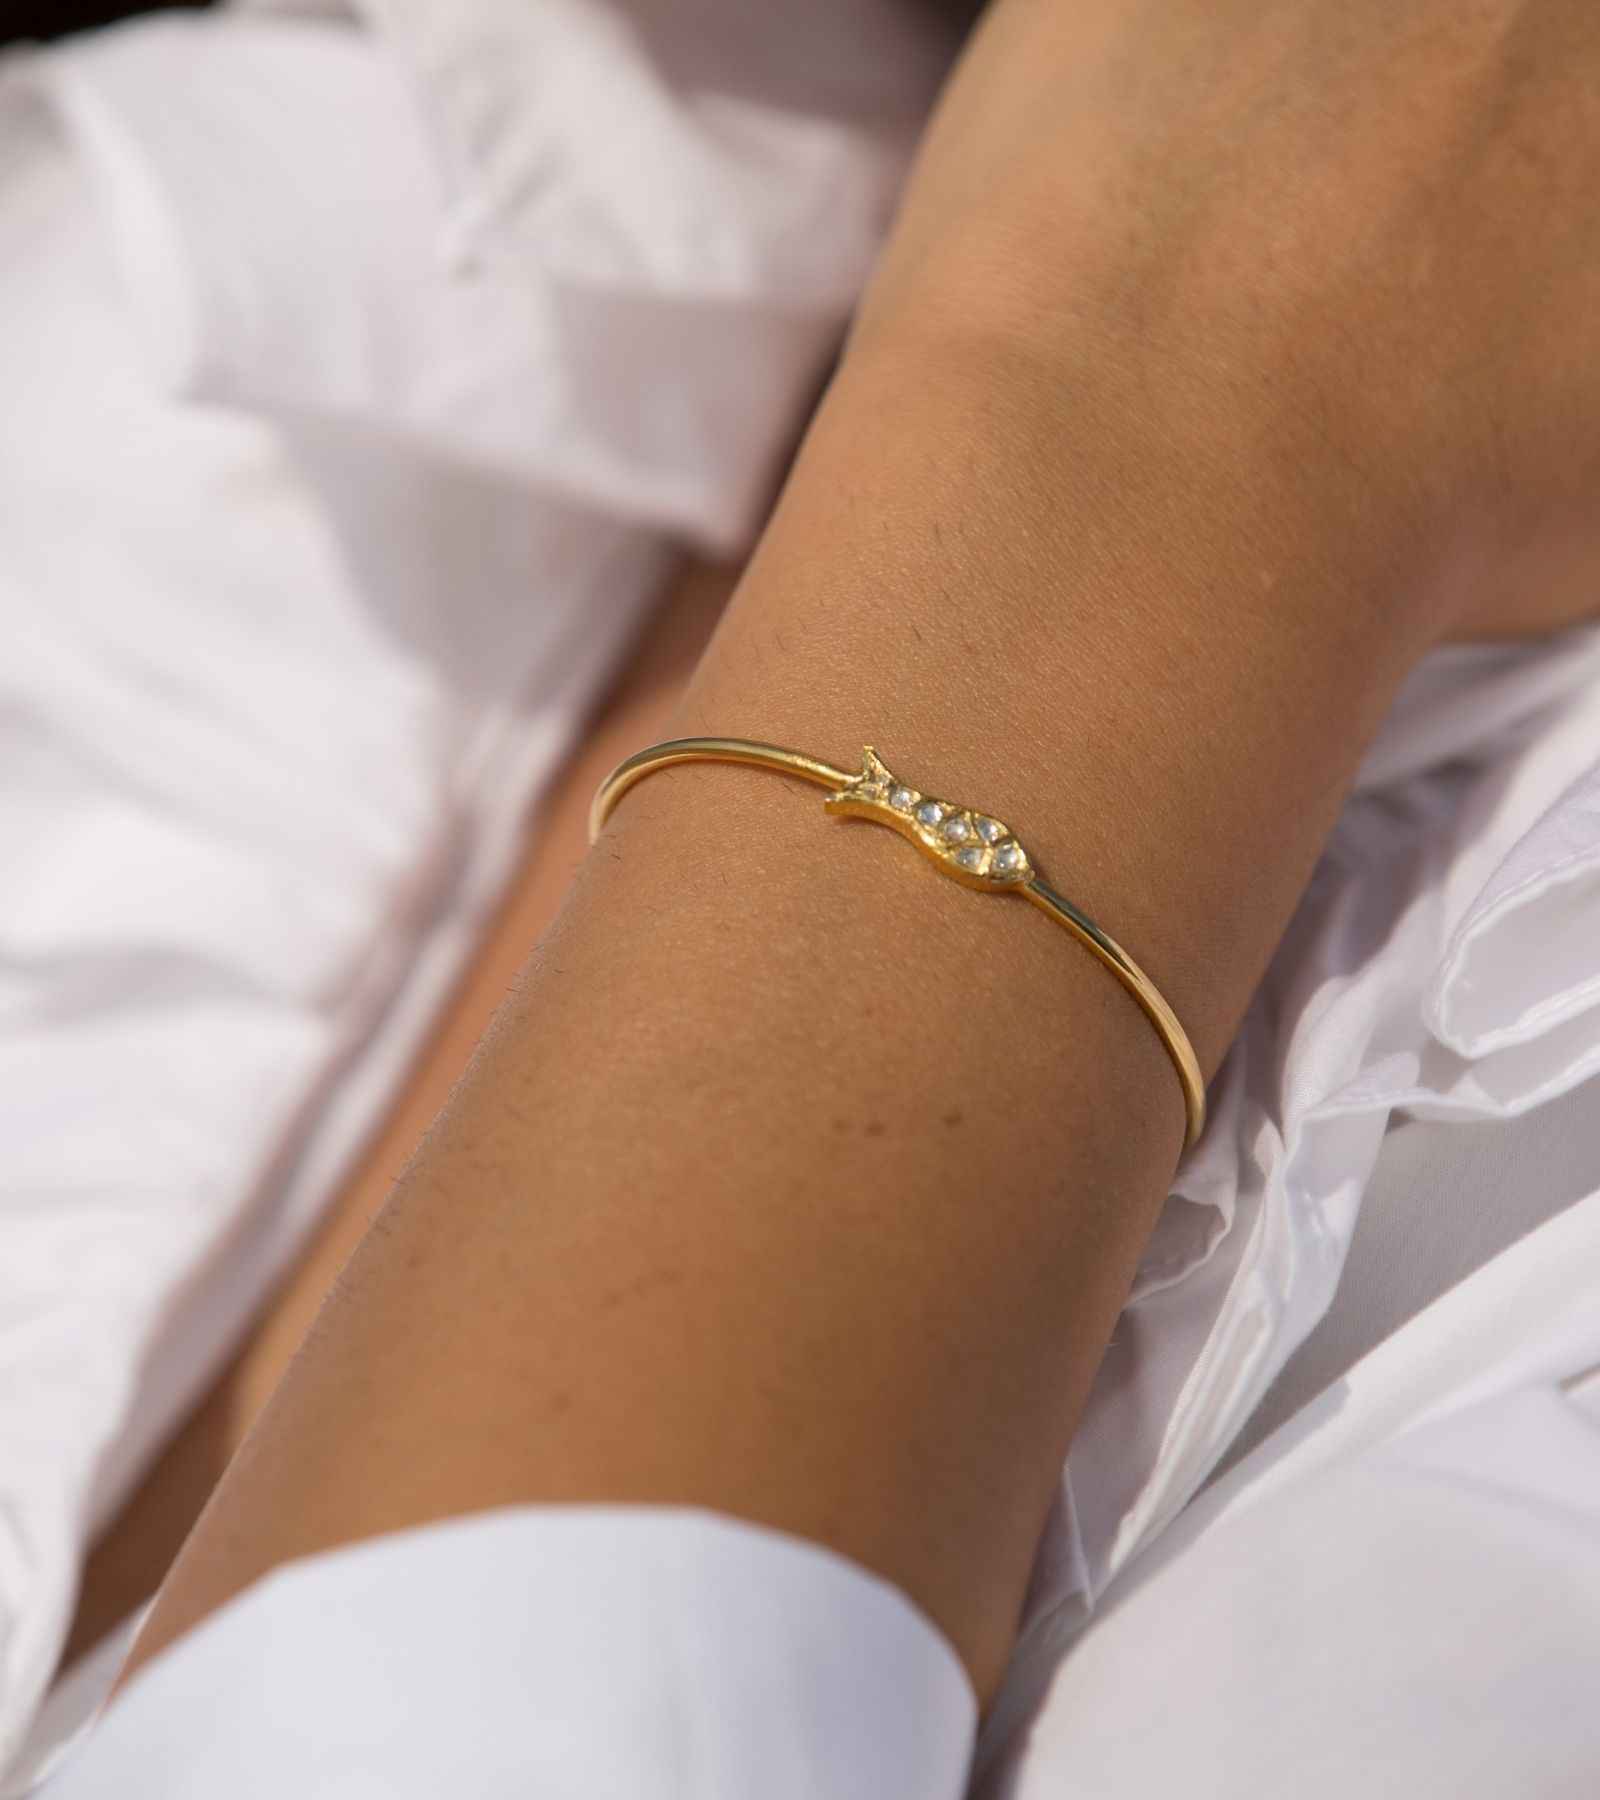 Polki Bracelet by UNCUT Jewelry